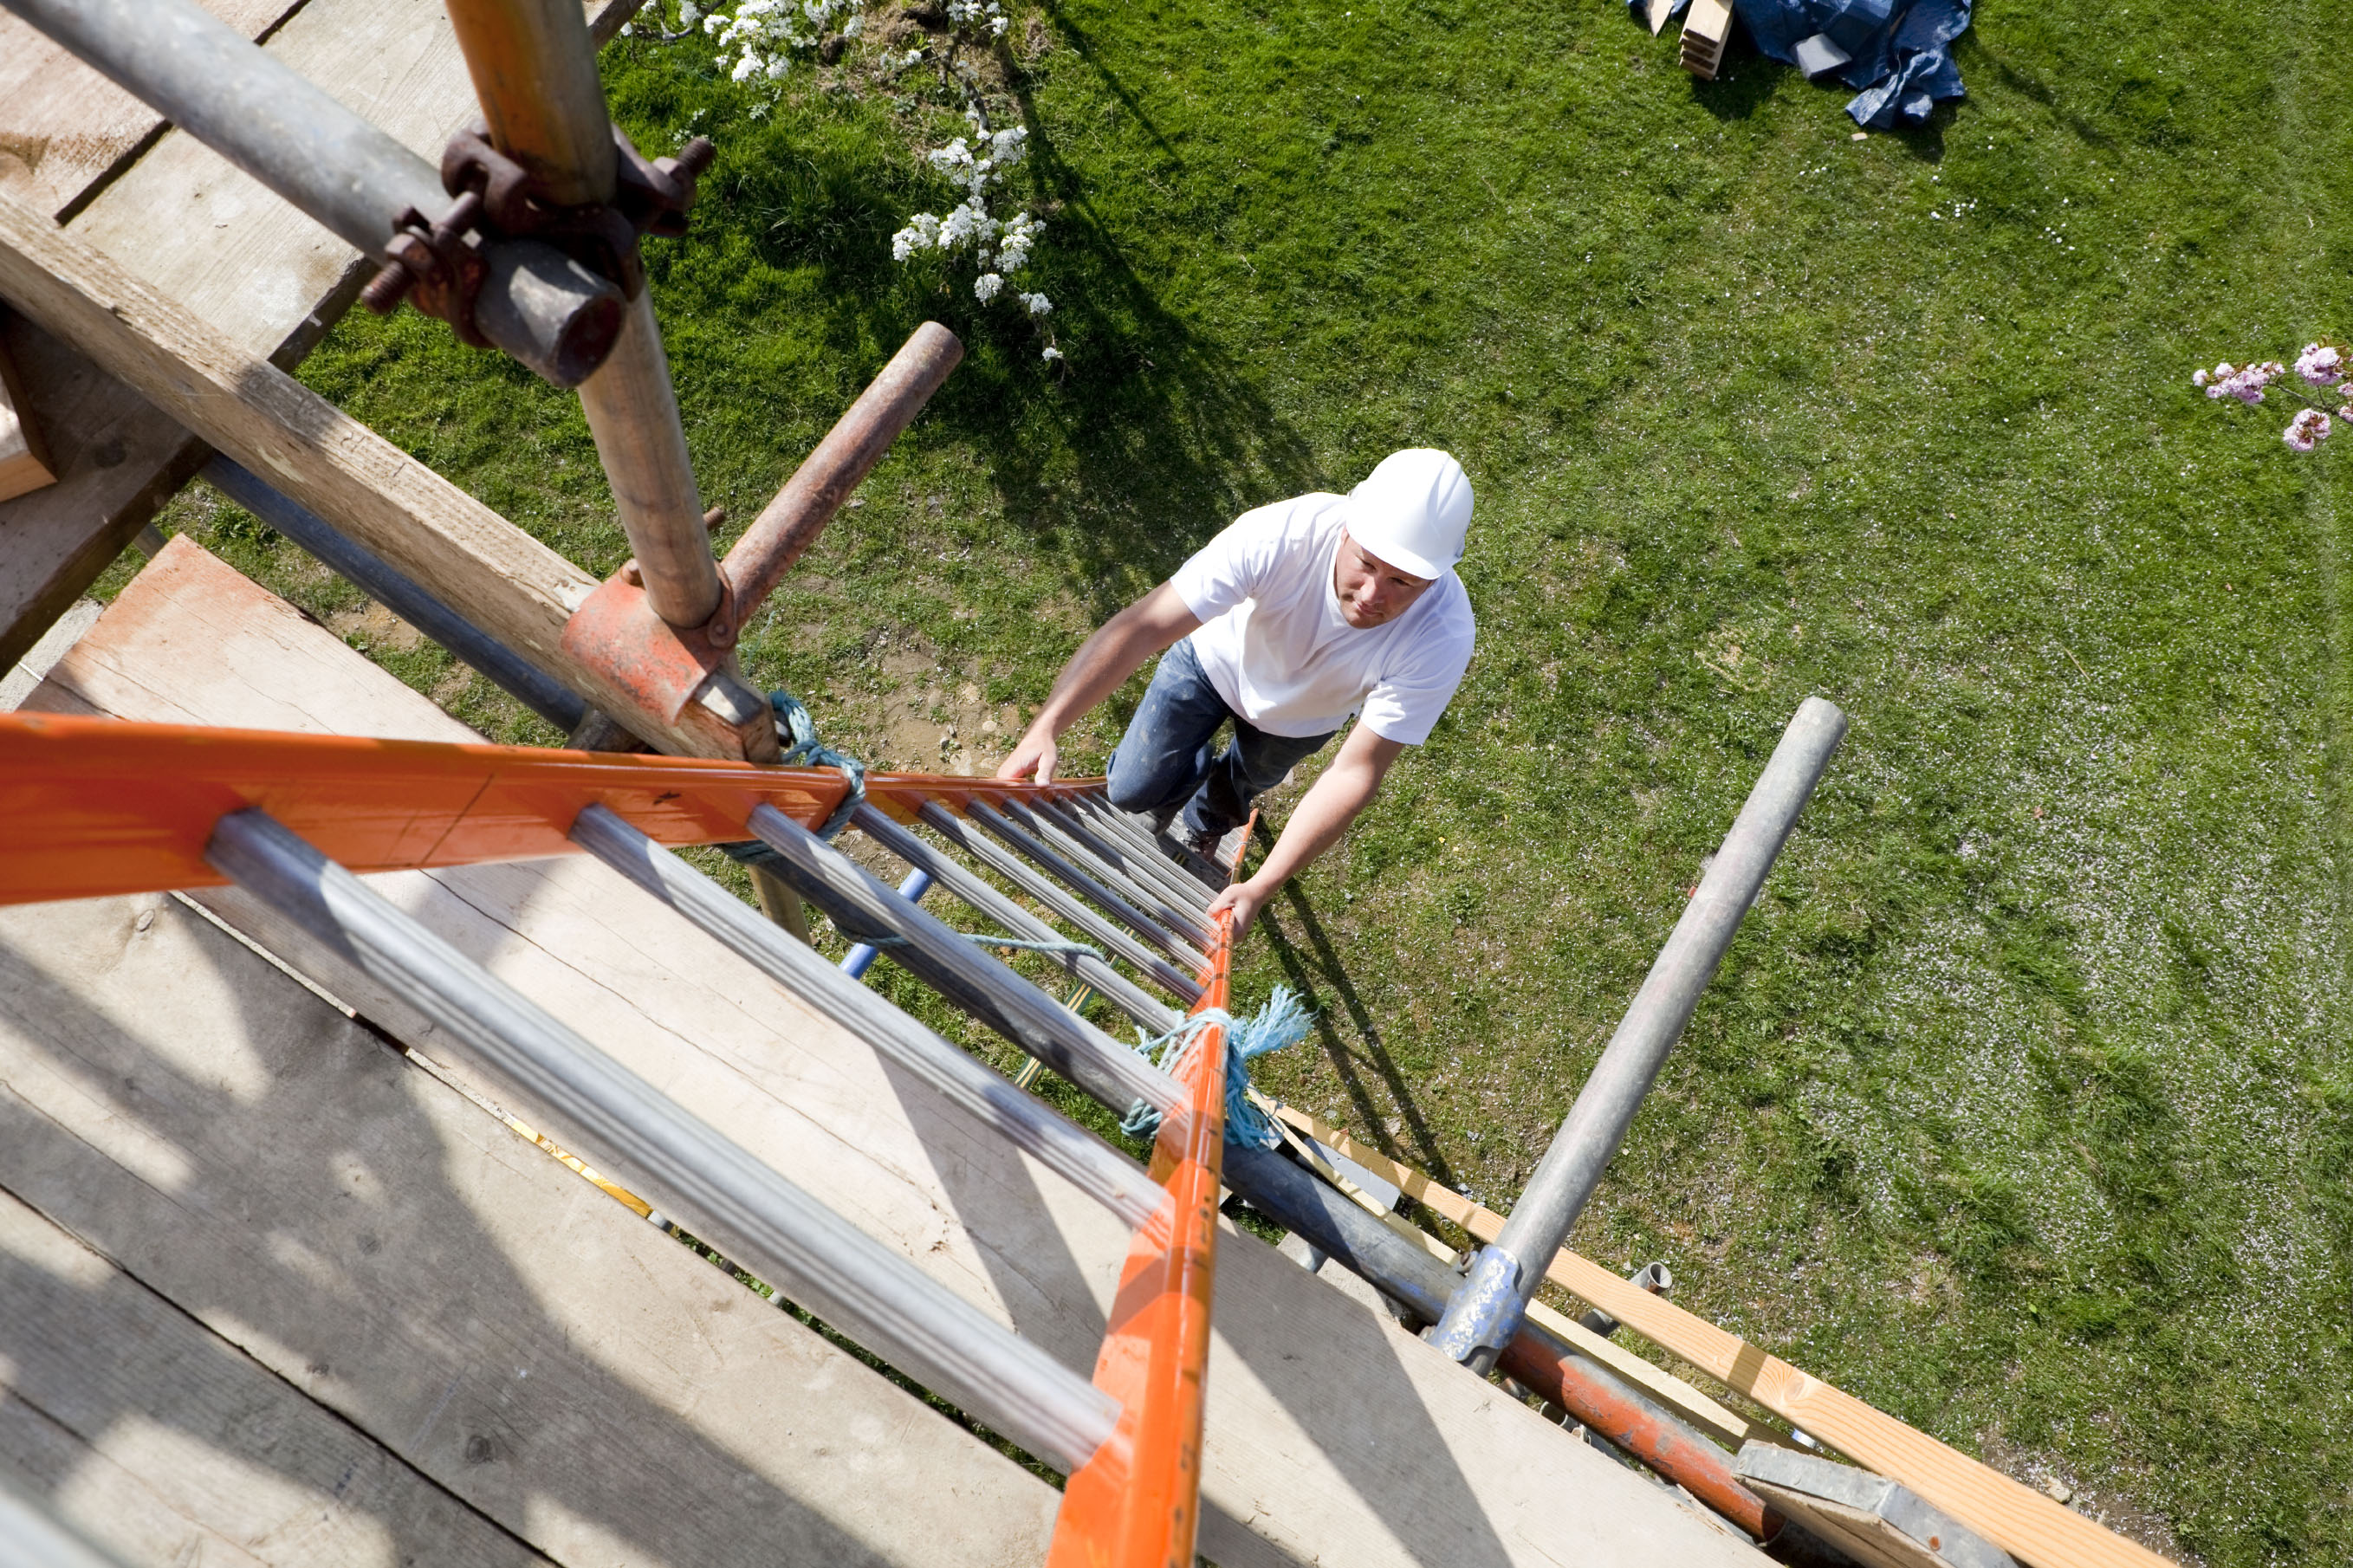 Ladder Safety Tips from OSHA